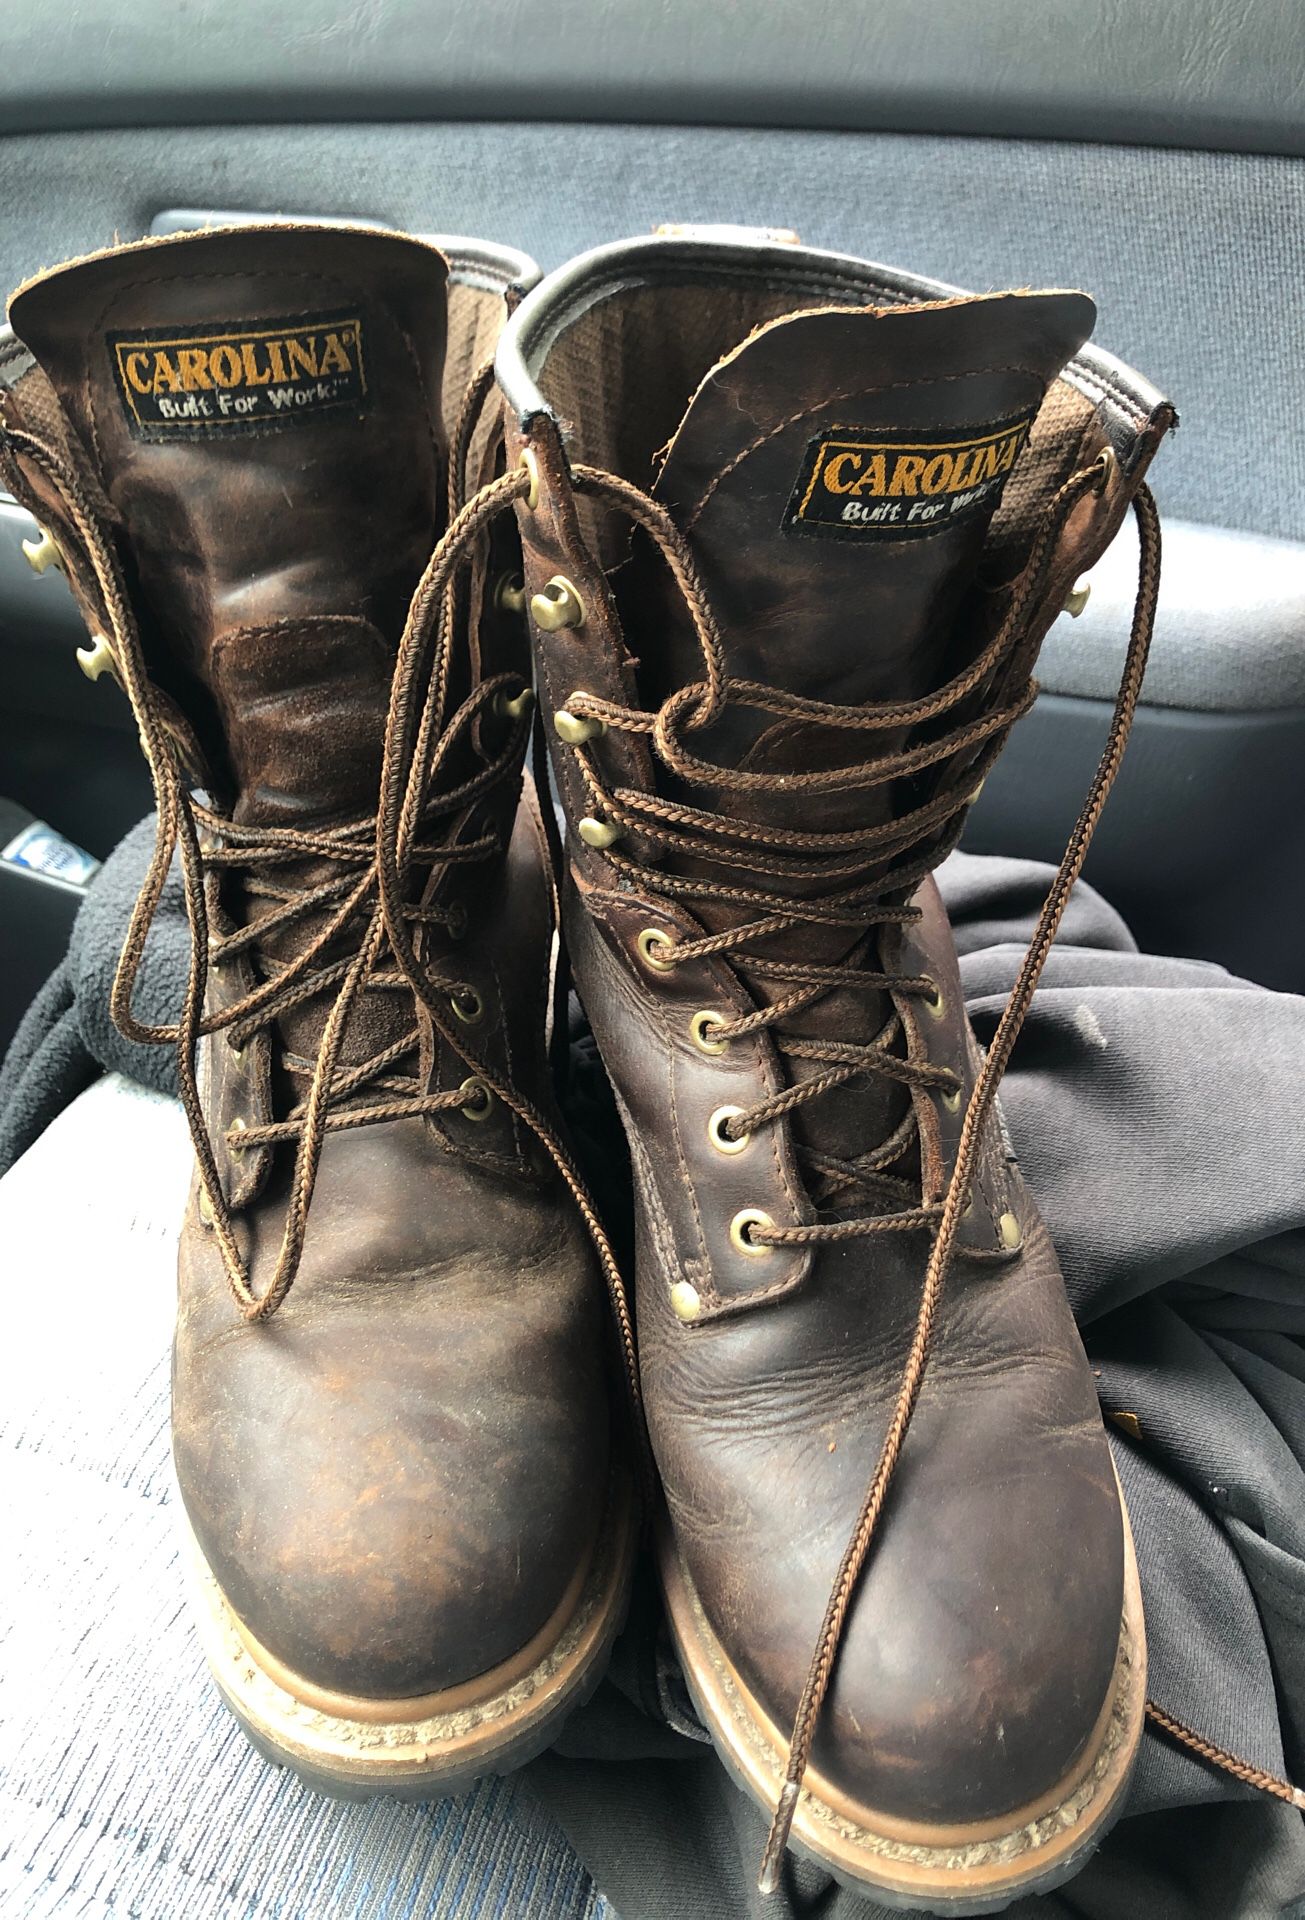 Carolina steel shank waterproof work boots